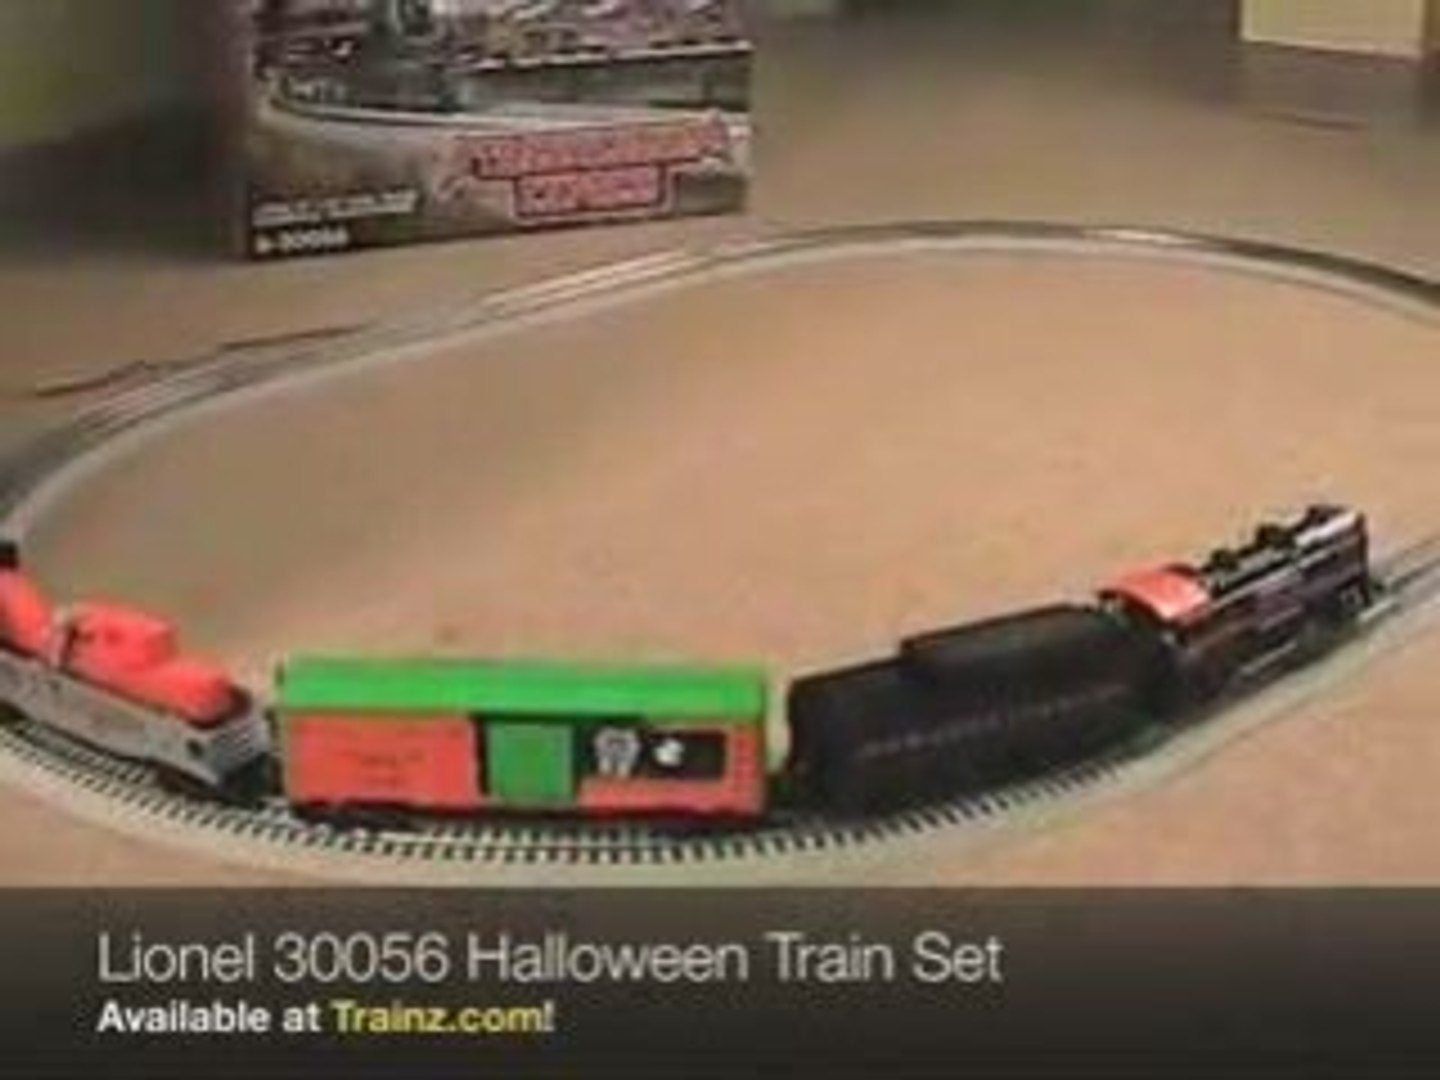 TRAINZ.COM - Lionel 30056 Halloween Train Set